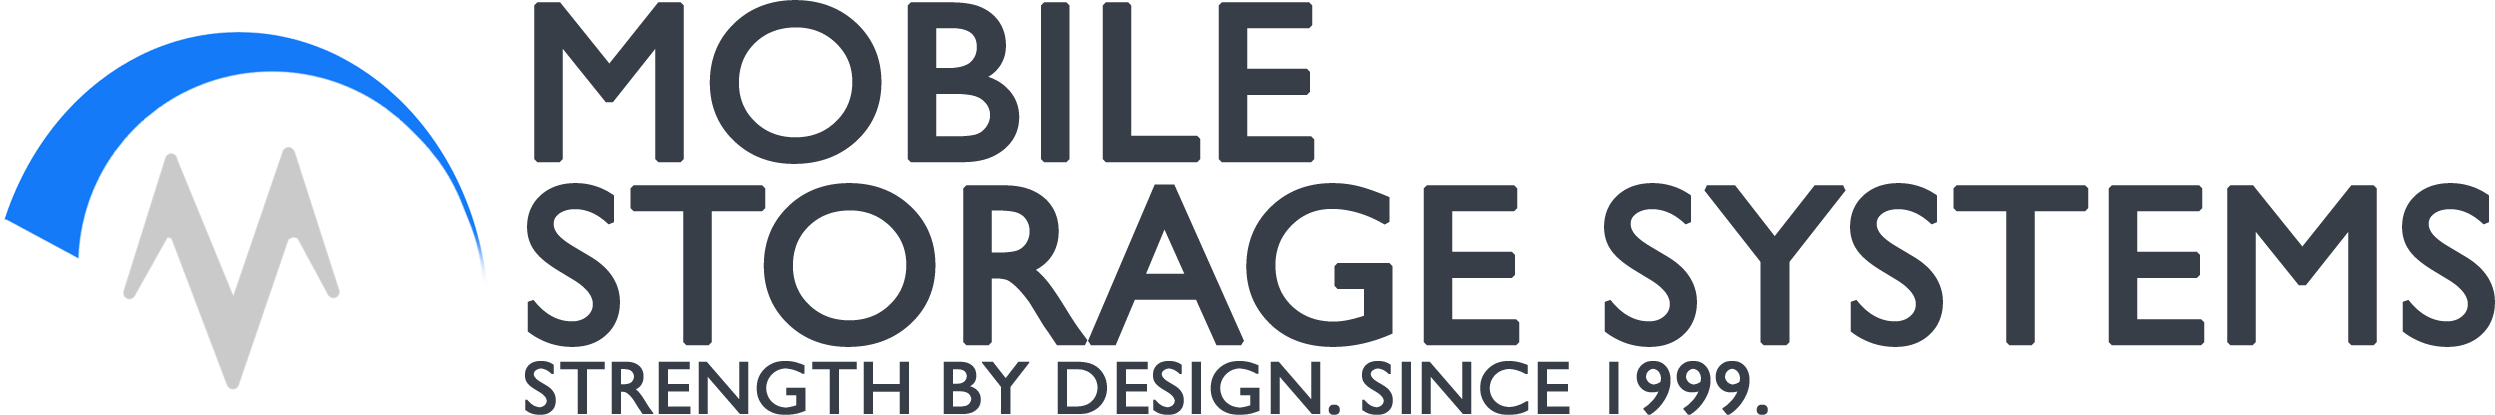 Mobile Storage Systems Logo